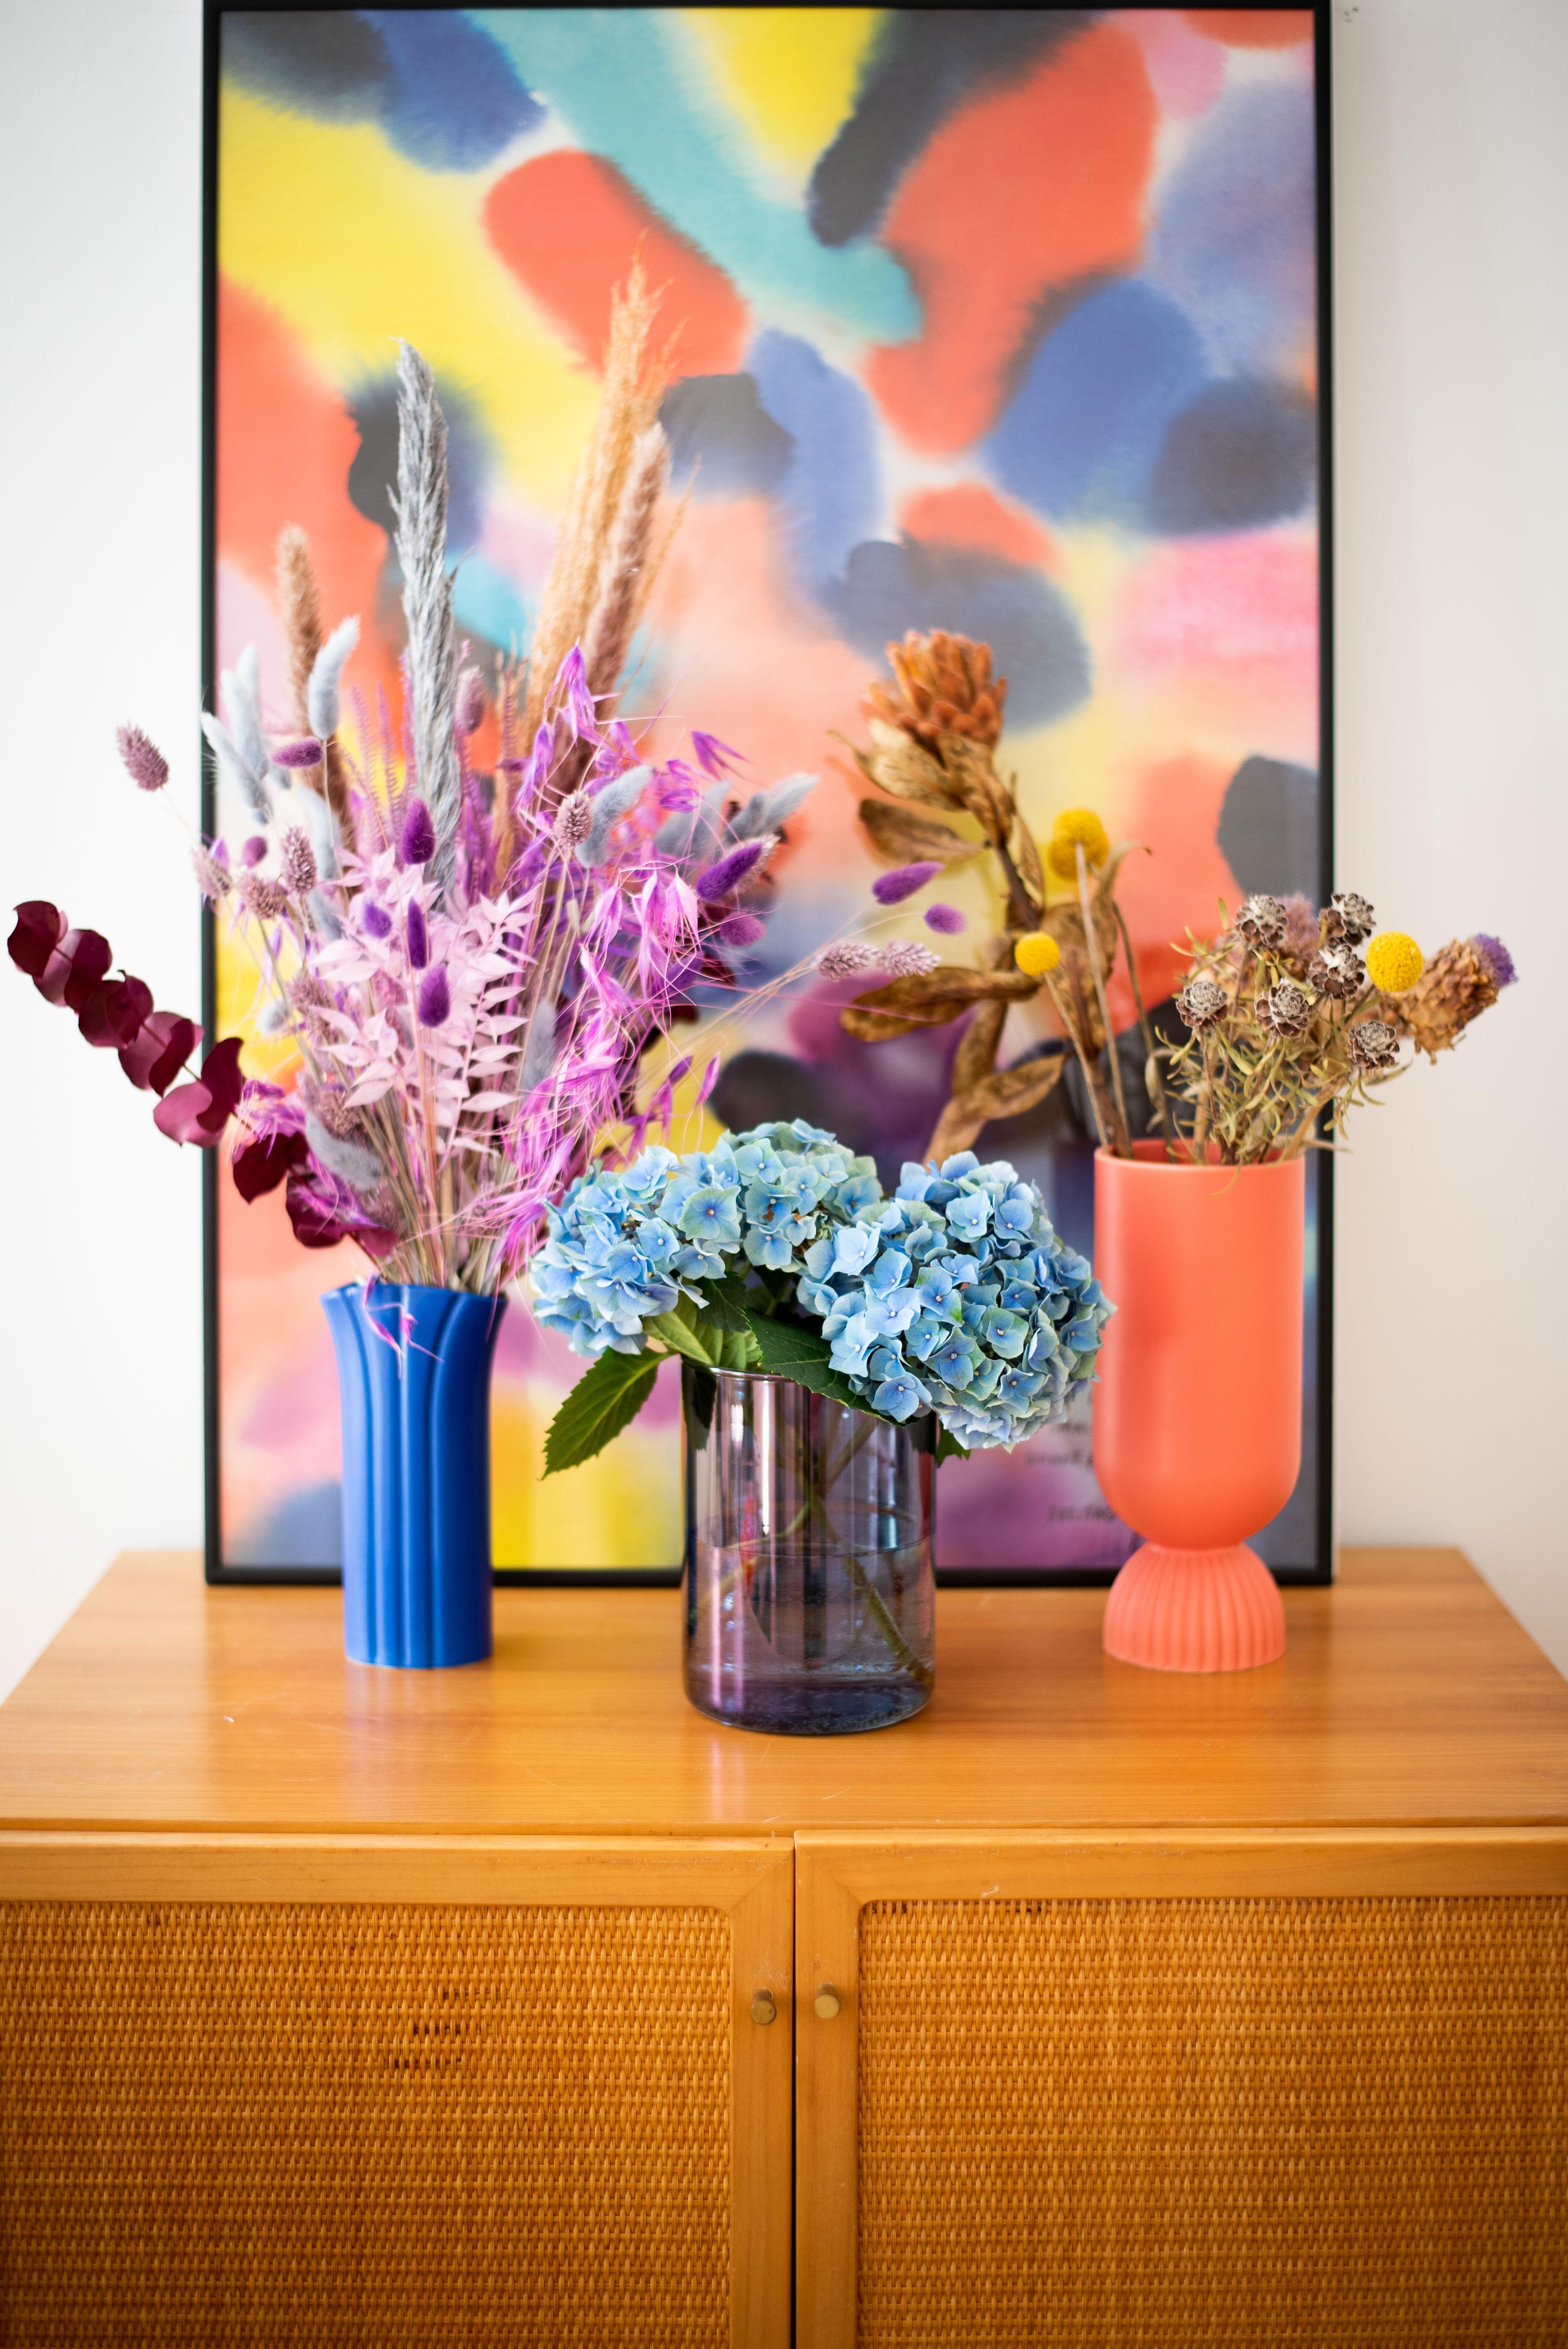 Meine bunte Vasensammlung! #vasensammlung #vasen #decoinspo #interiordesign #autumnmood #trockenblumen #styleinspo